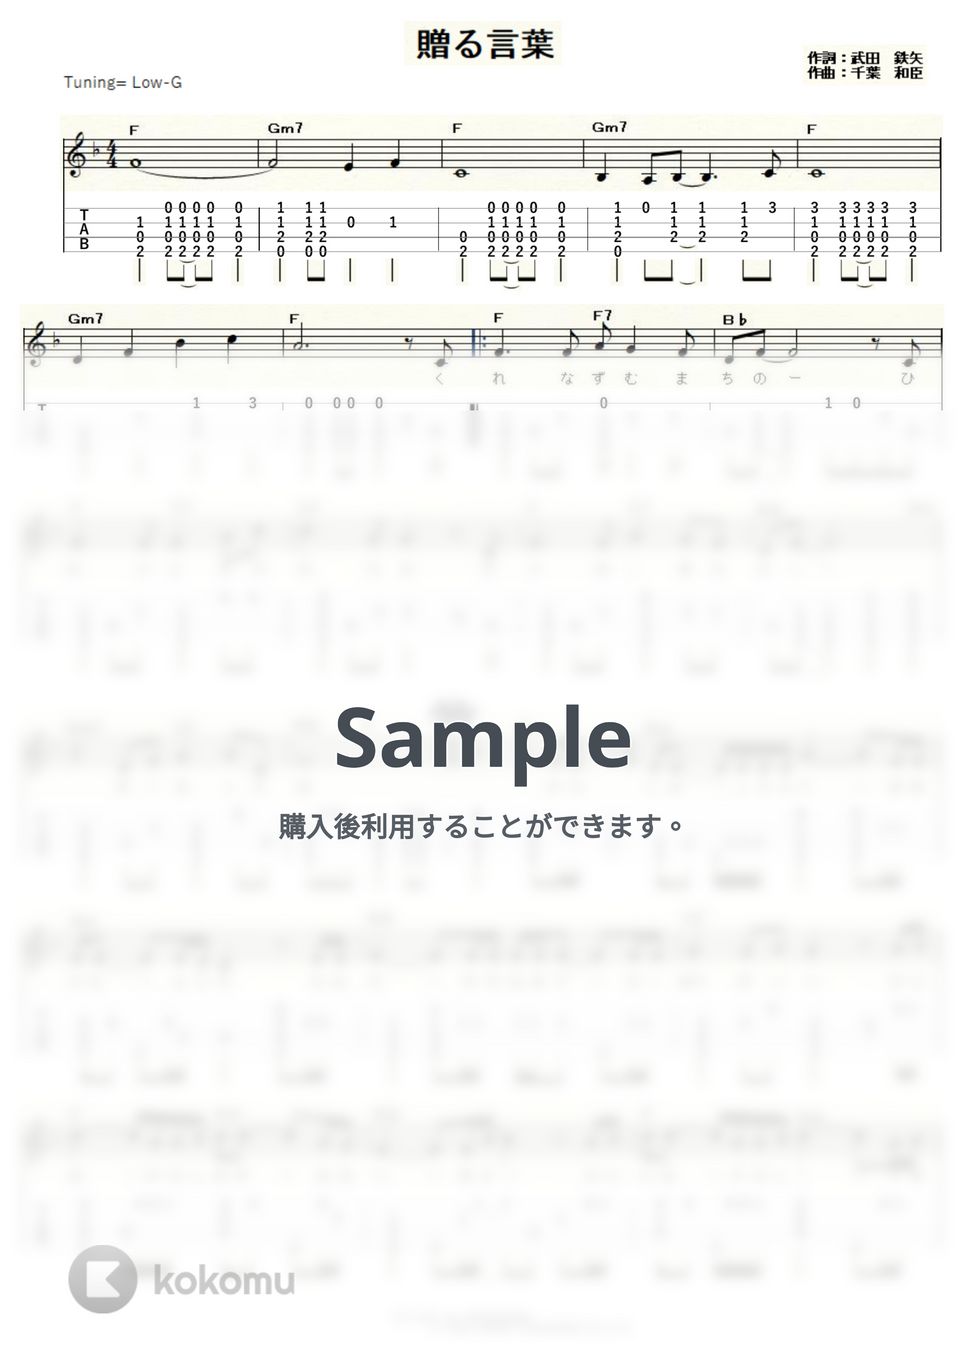 海援隊 - 贈る言葉 (ｳｸﾚﾚｿﾛ / Low-G / 中級) by ukulelepapa